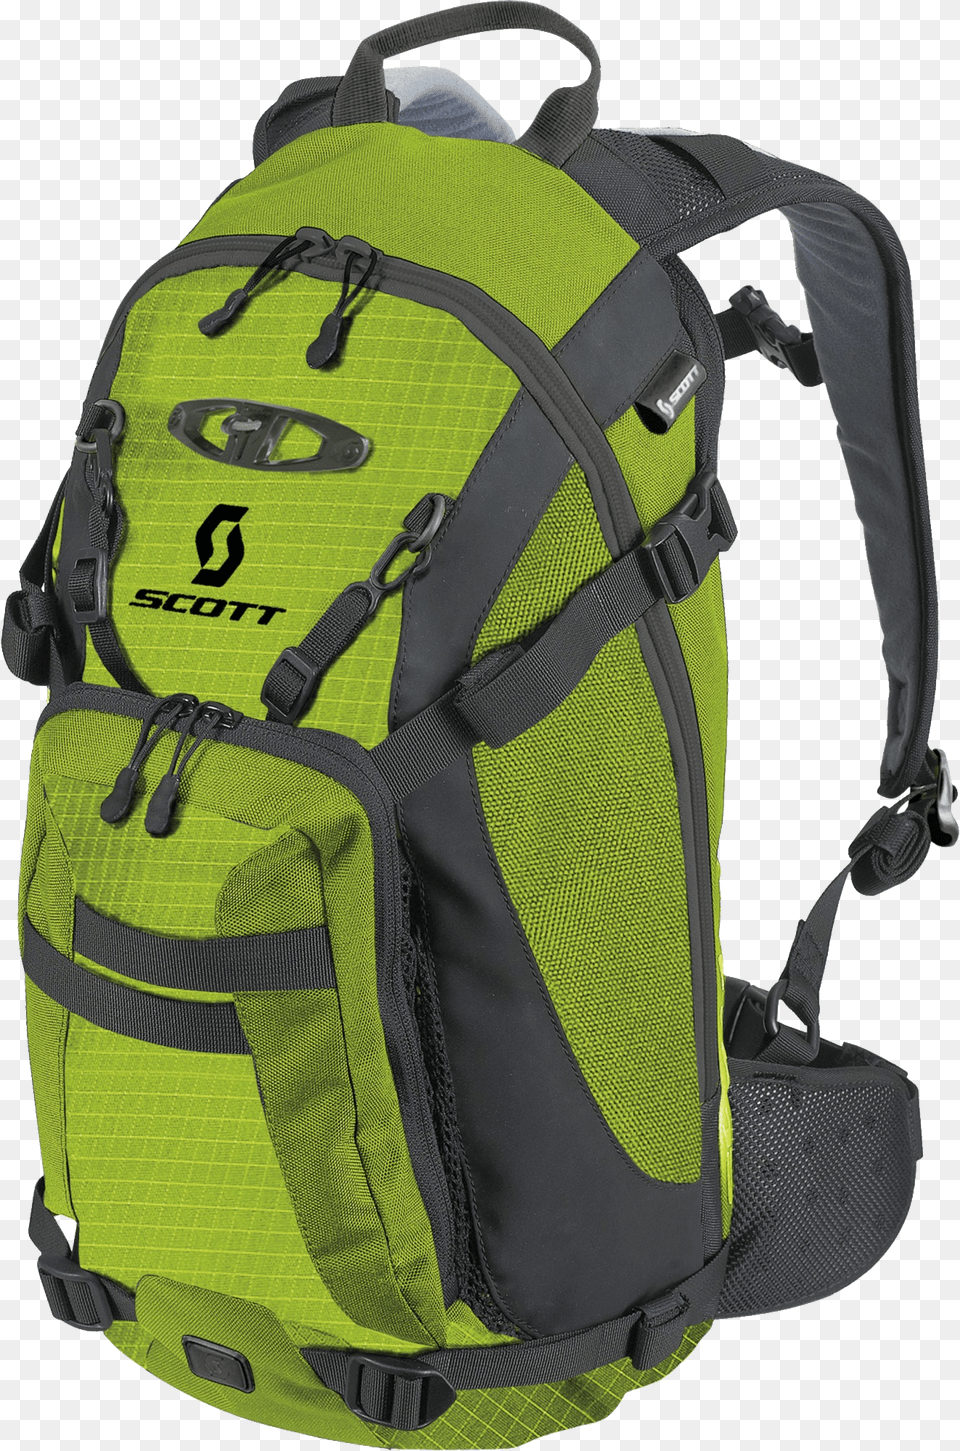 Scott Stylish Mini Tour Backpack Image Hiking Backpack Transparent Background, Bag Free Png